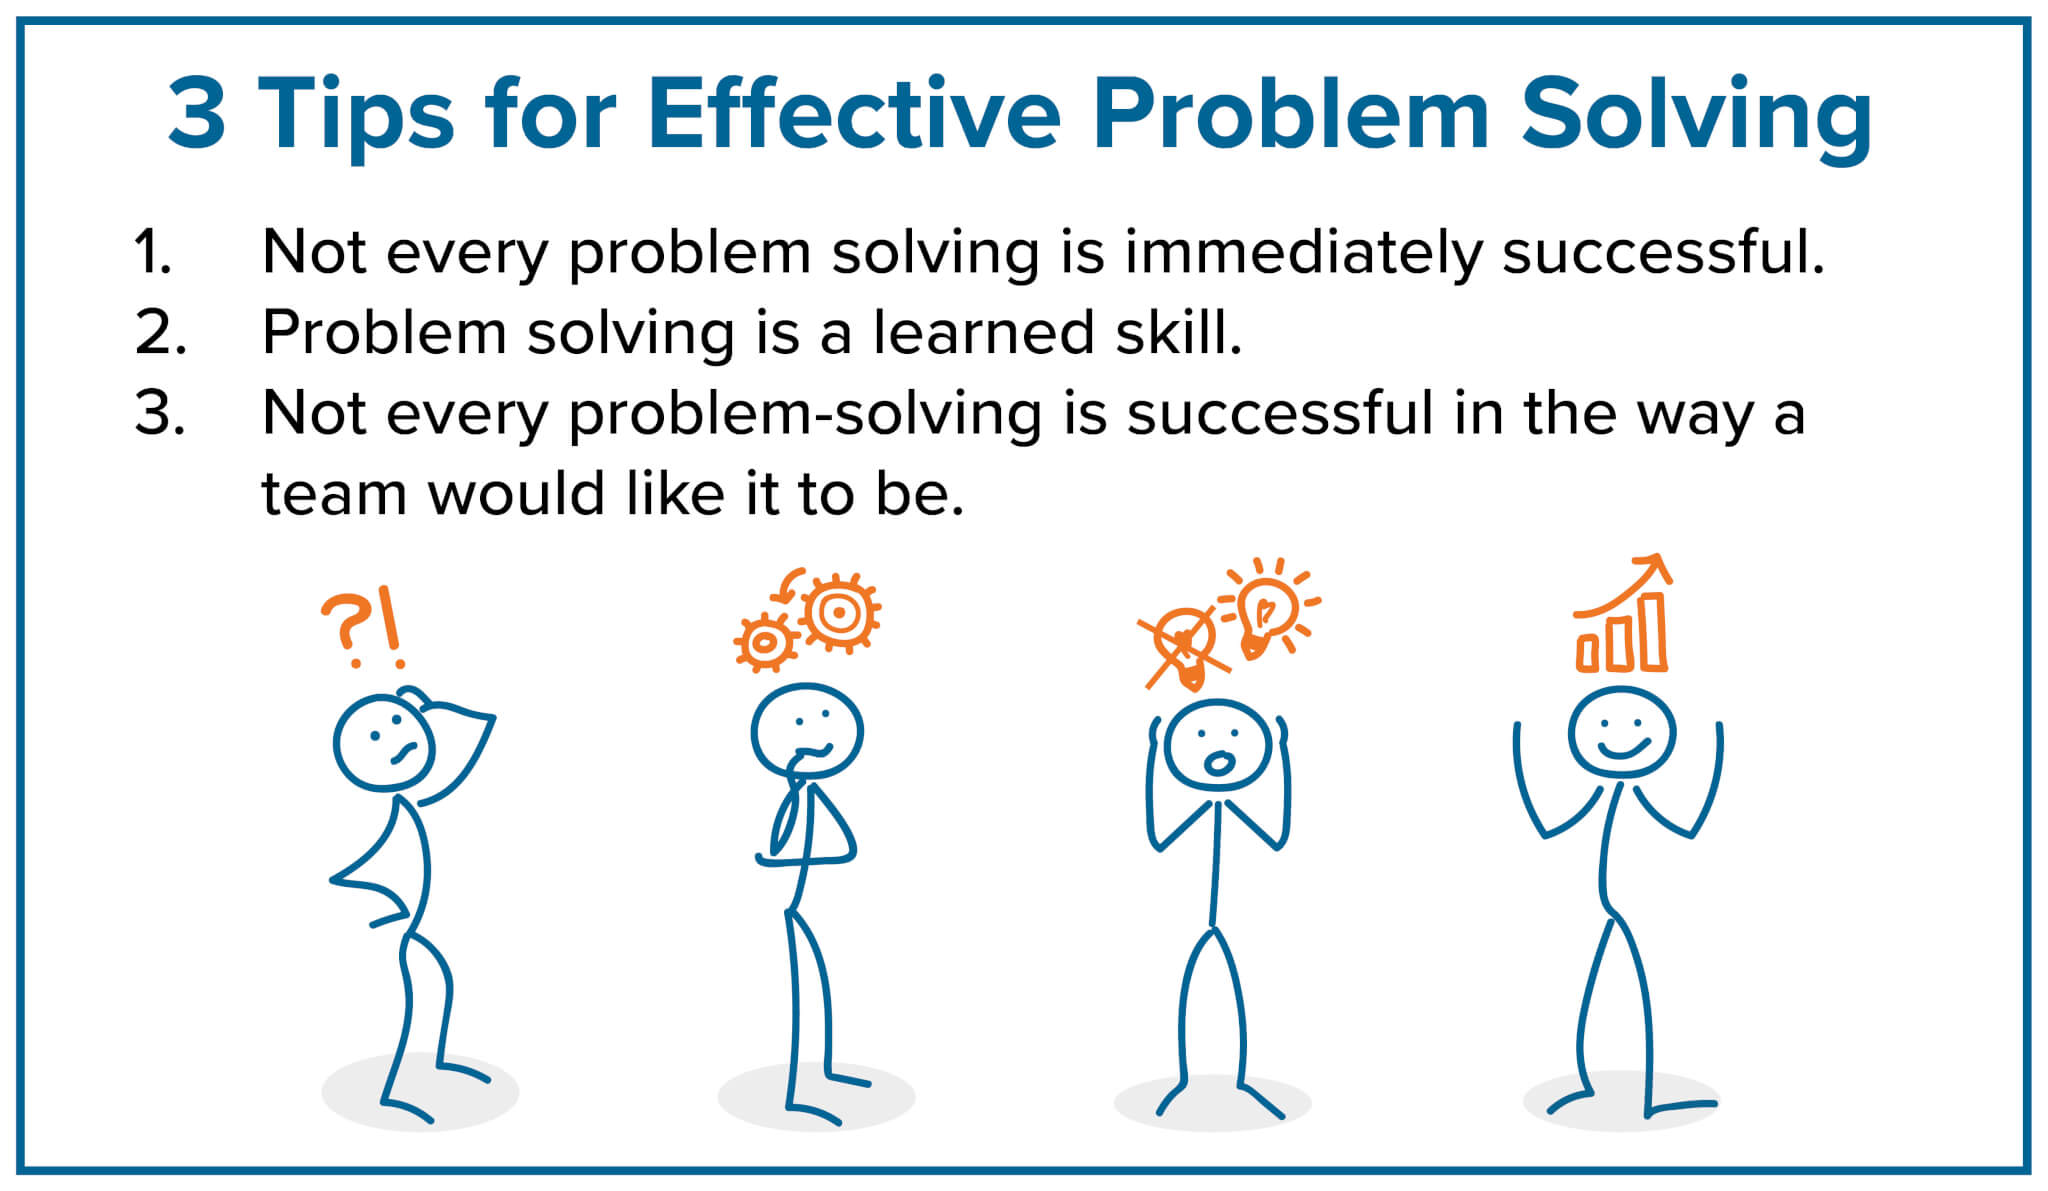 how to develop problem solving attitude